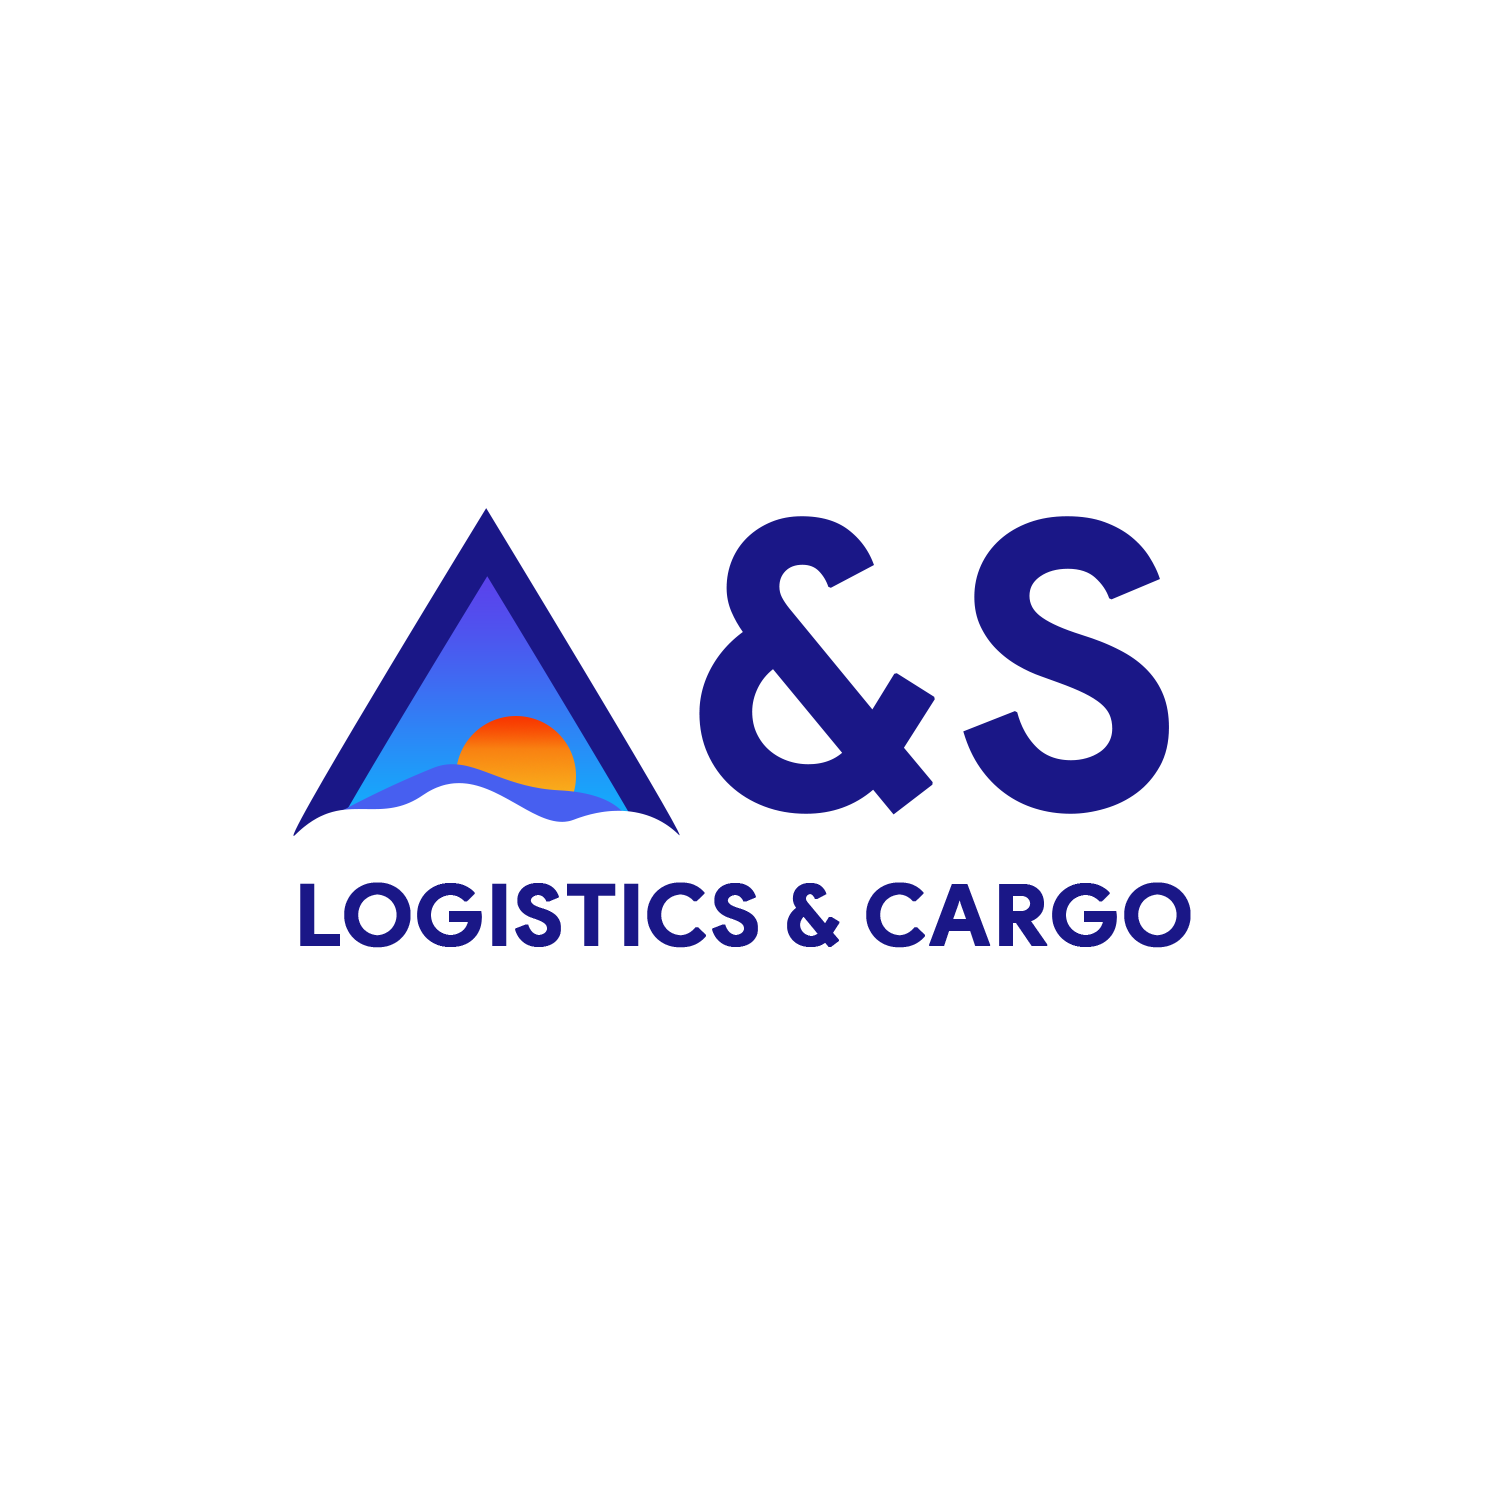 Air & Sea Logistics and Cargo